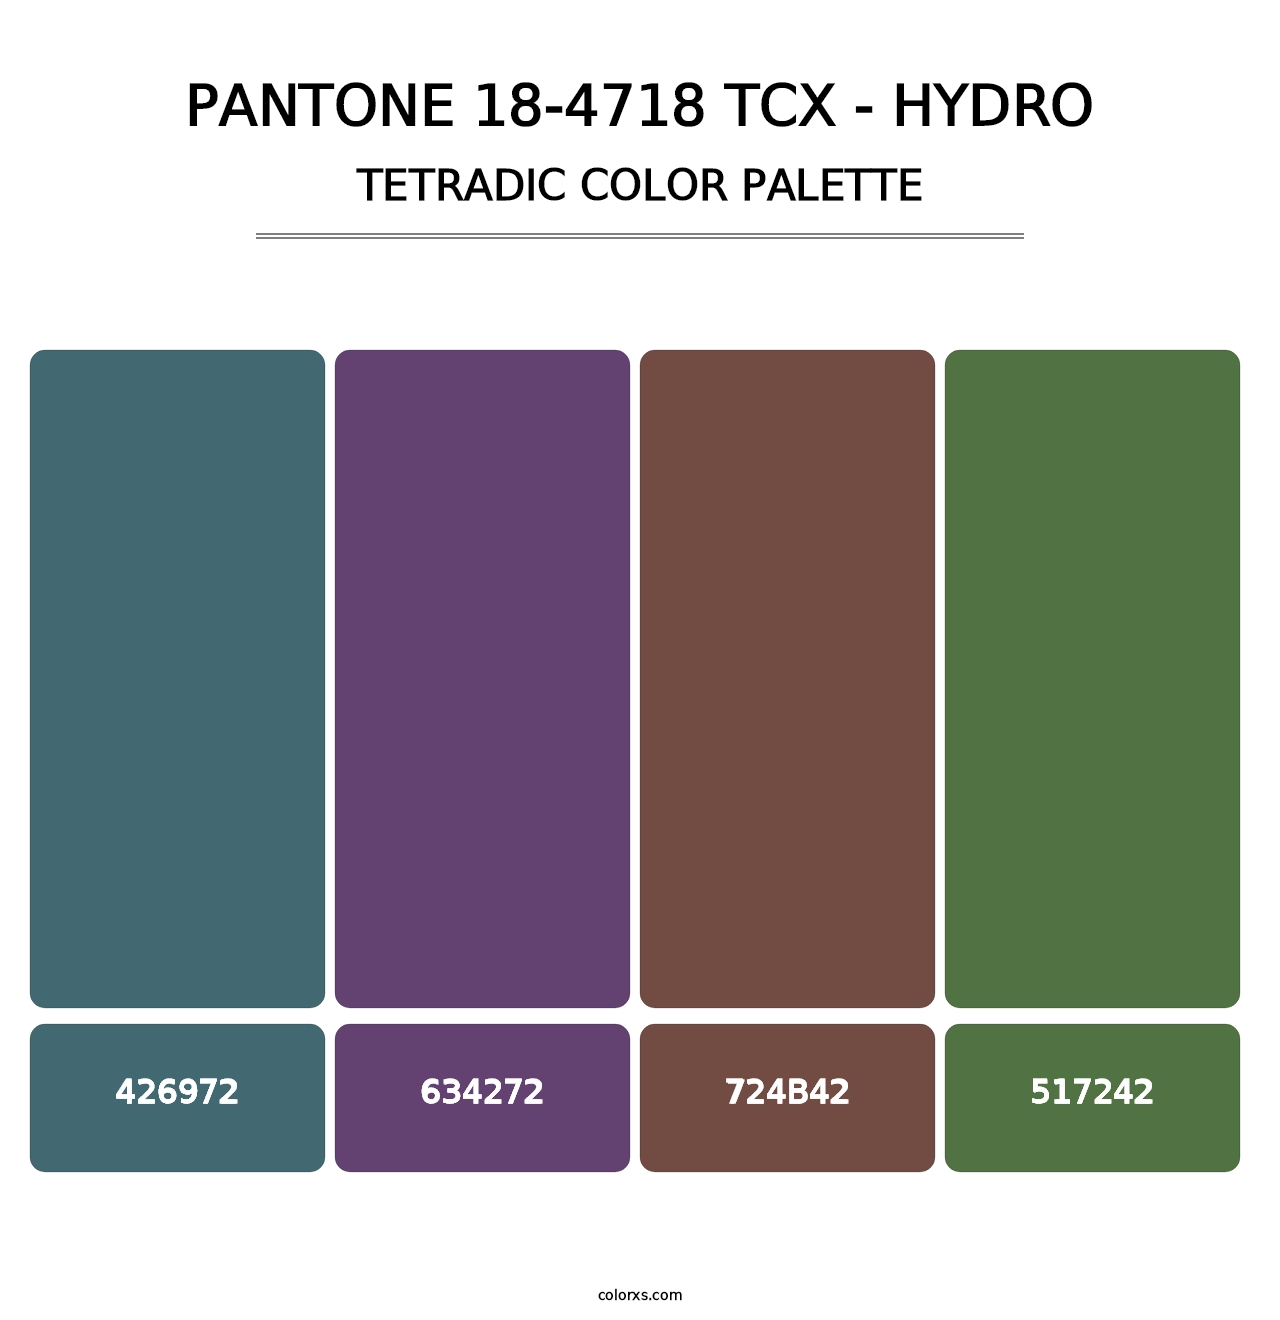 PANTONE 18-4718 TCX - Hydro - Tetradic Color Palette